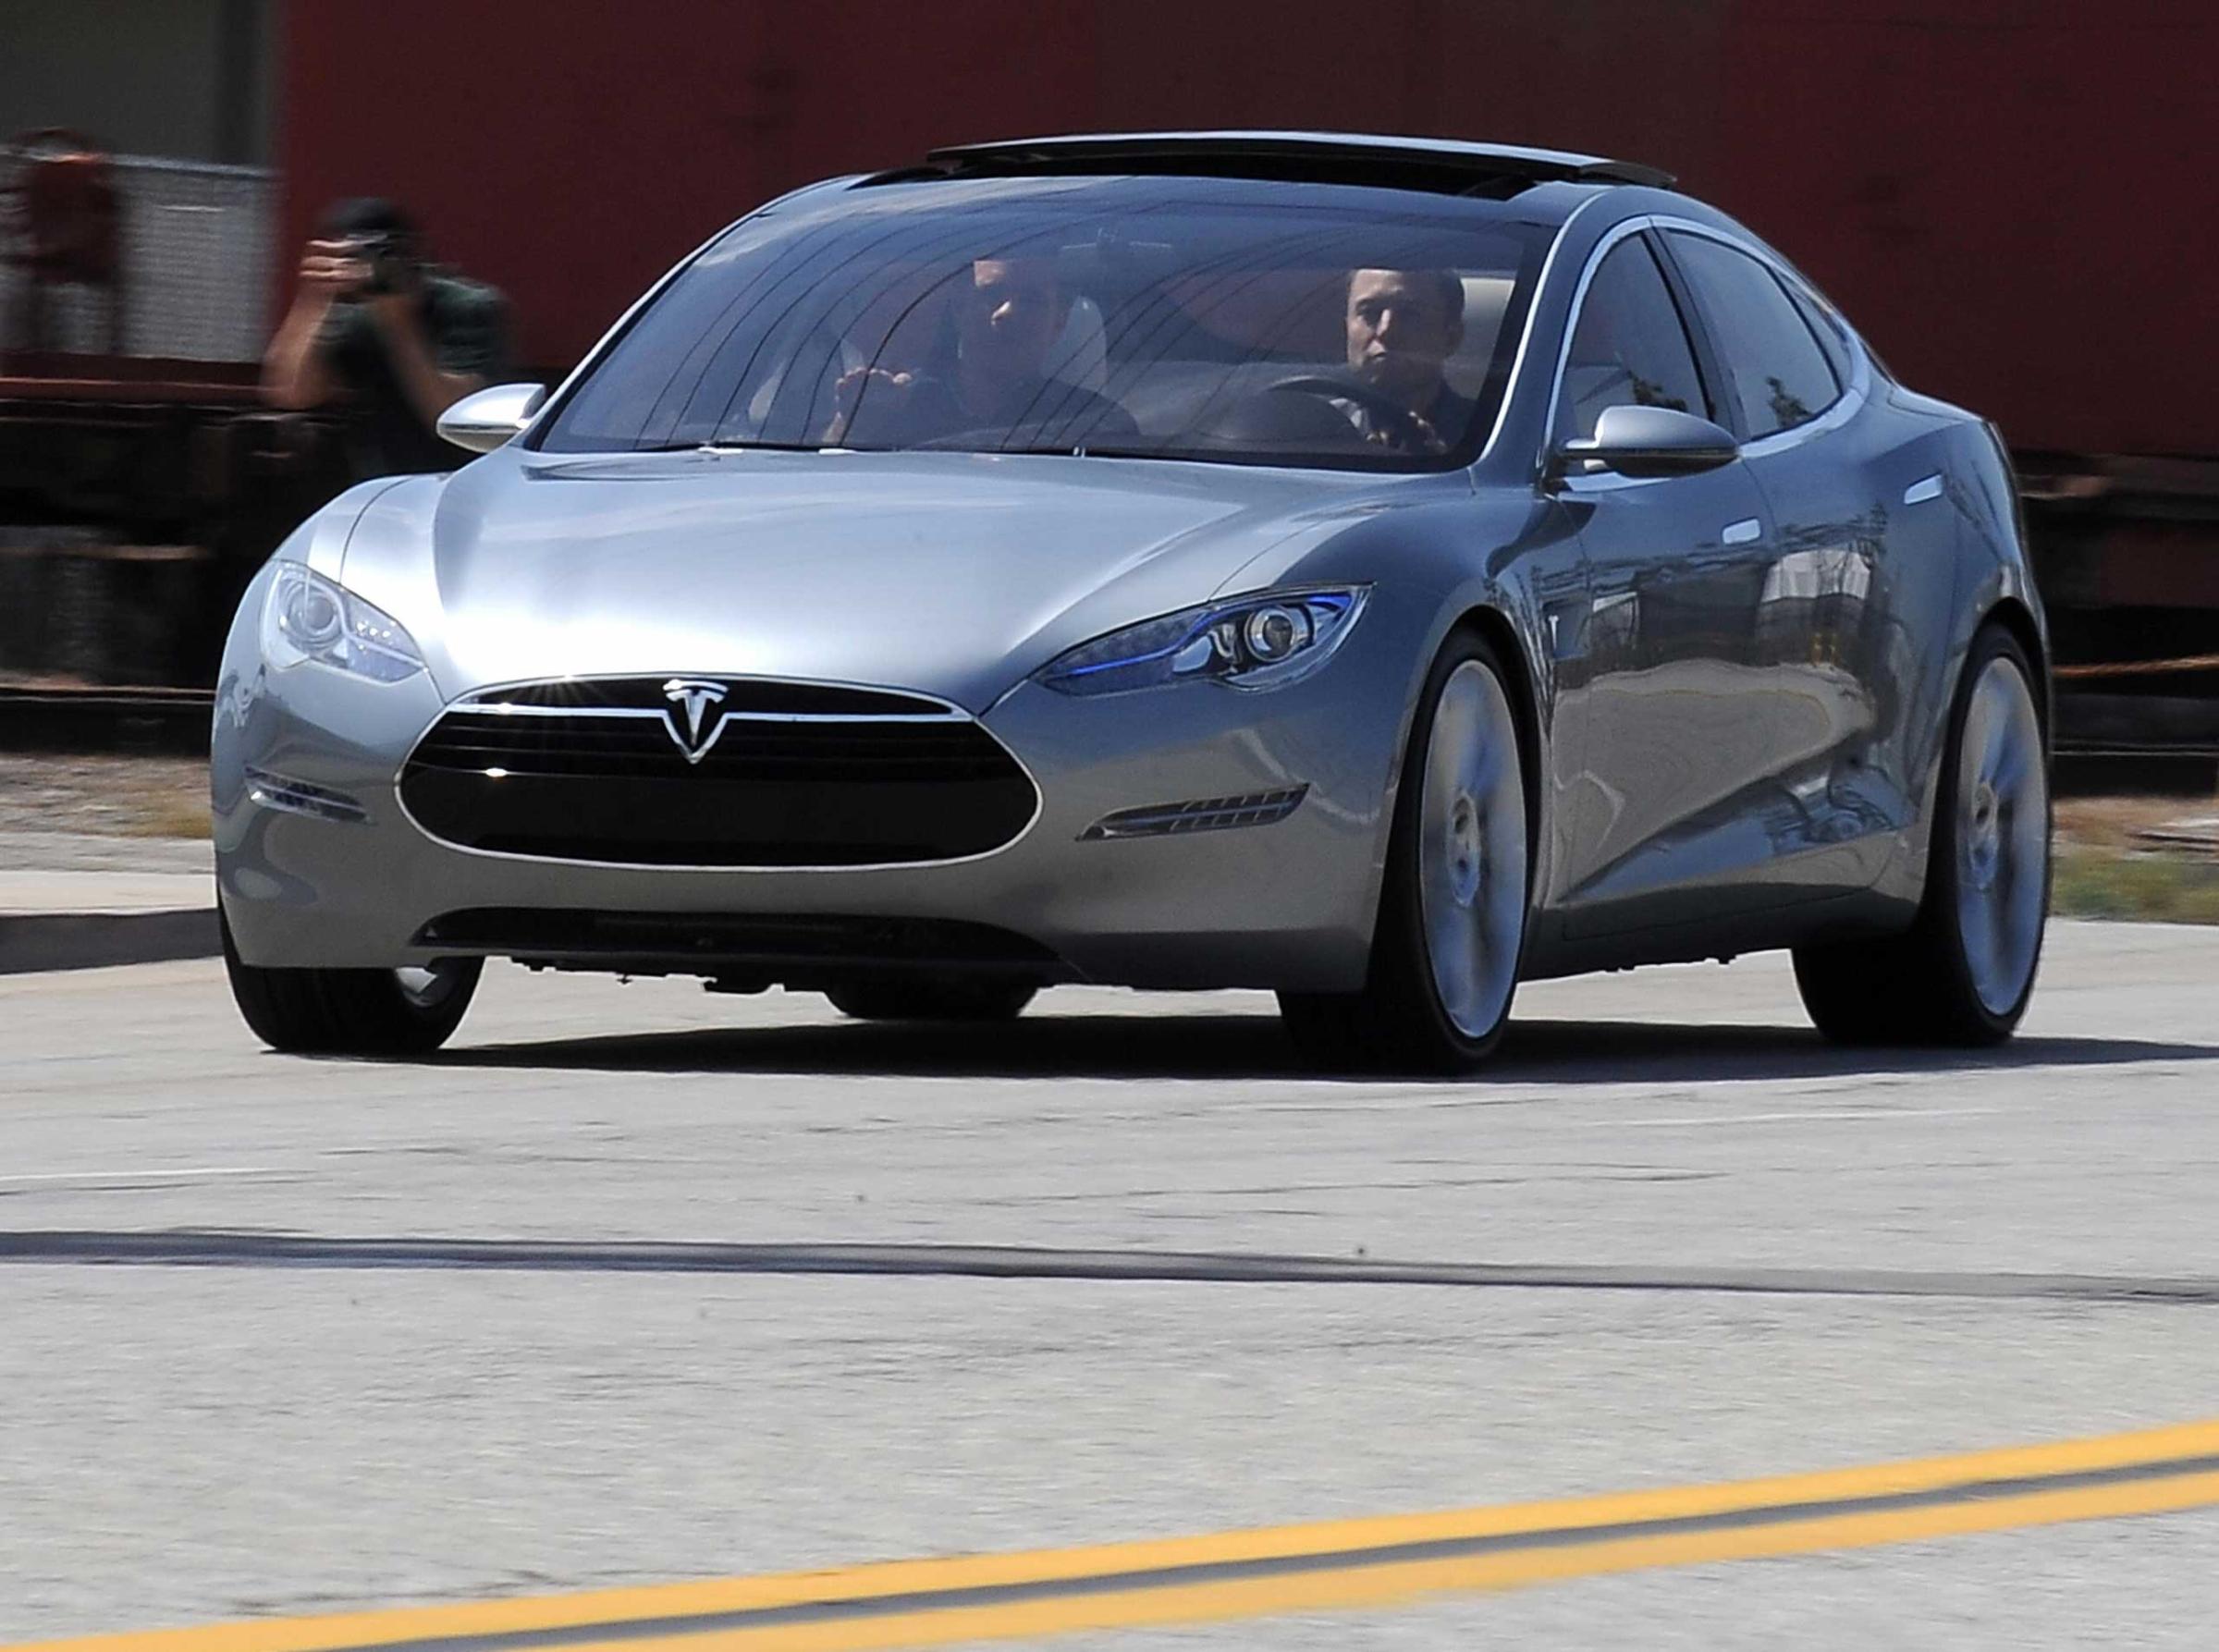 Tesla Motors Chairman and CEO Elon Musk